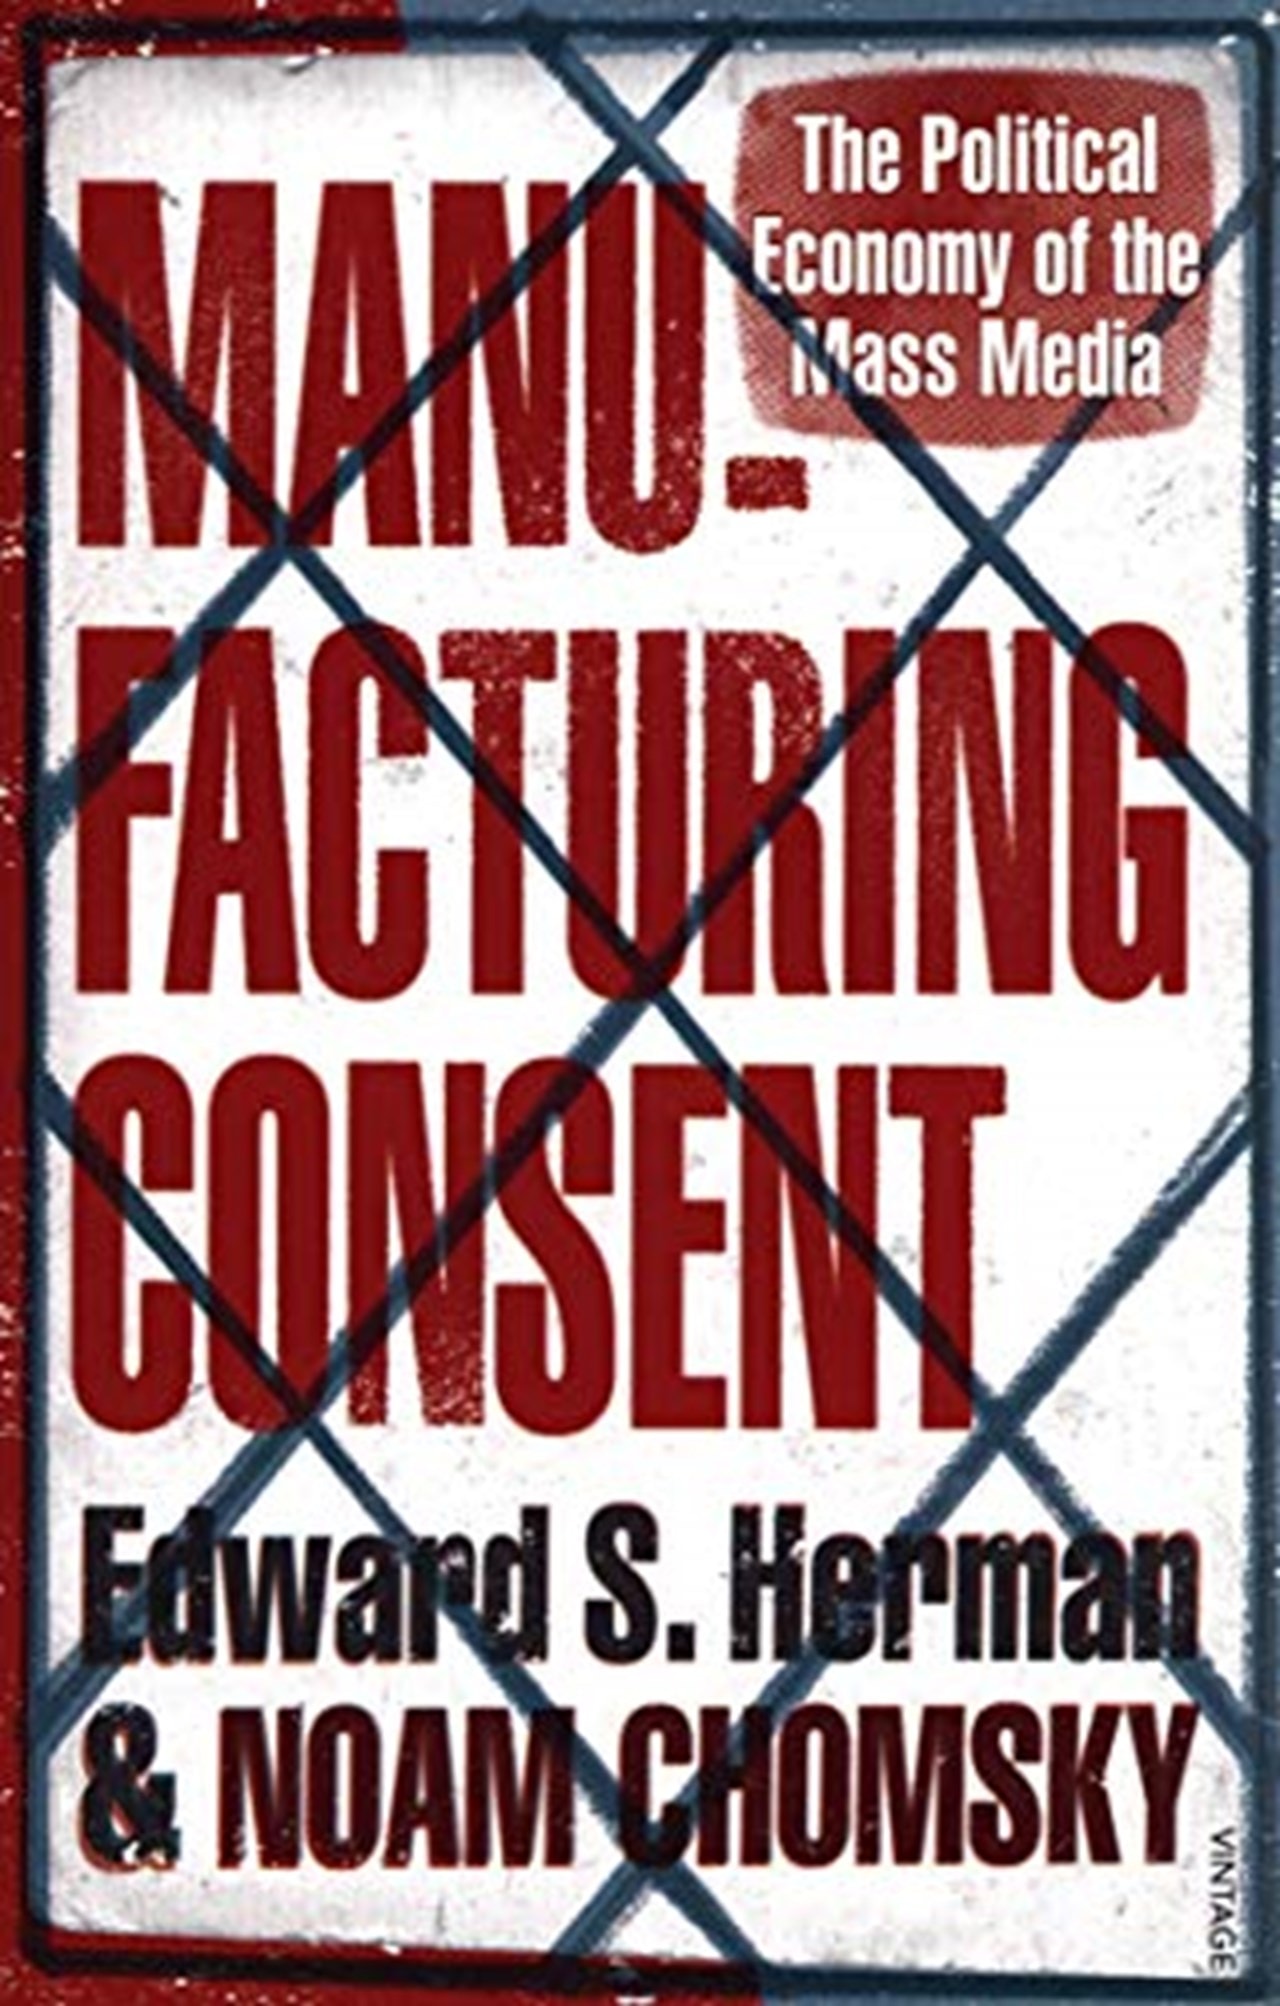 Noam Chomsky, Edward S. Herman: Manufacturing consent (Paperback, 1994, Vintage)